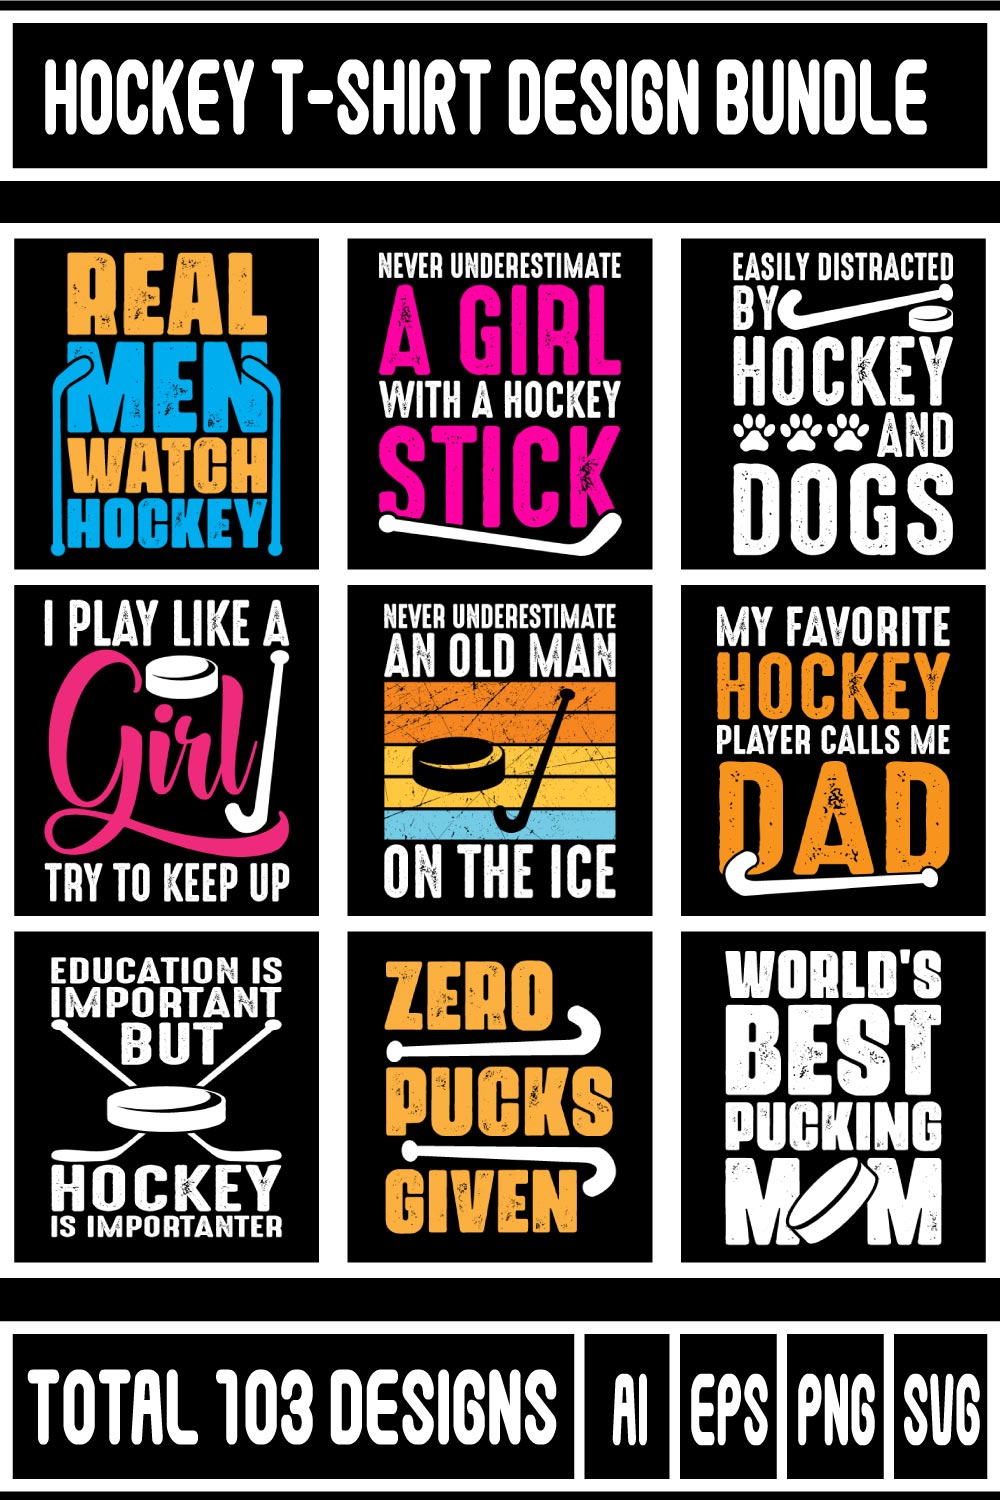 Hockey T-shirt Design Bundle pinterest preview image.